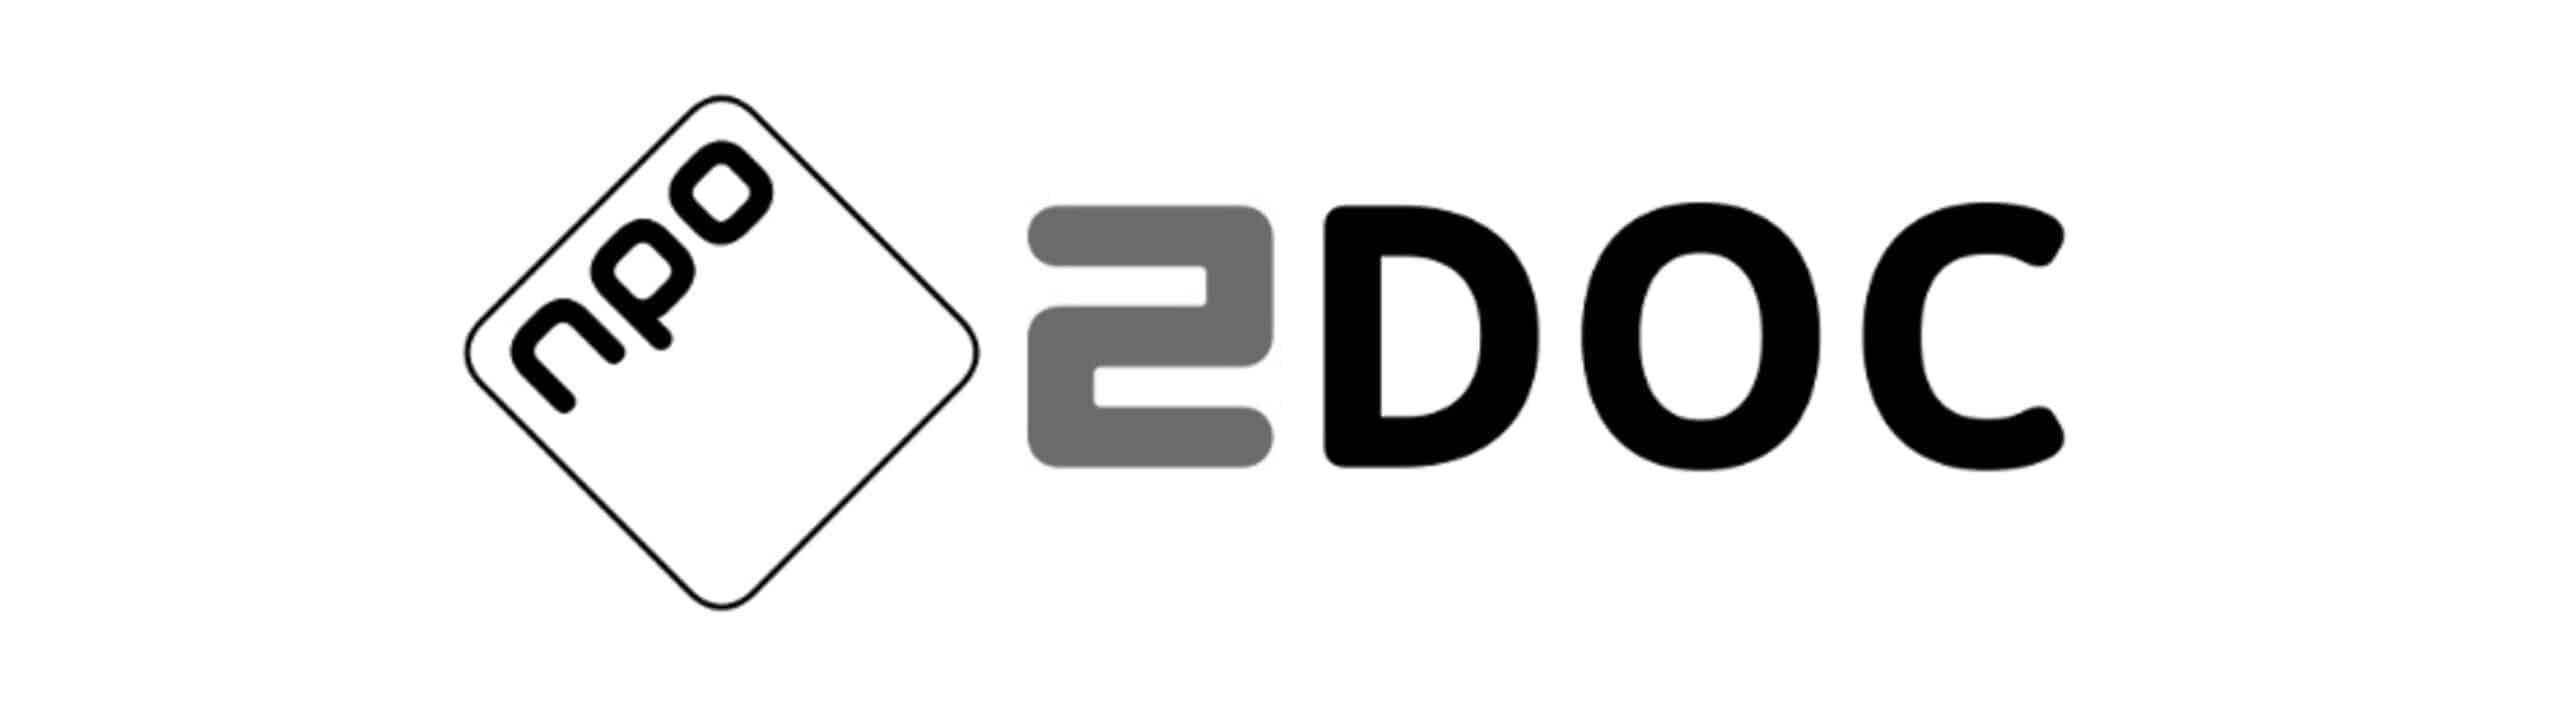 2doc-logo